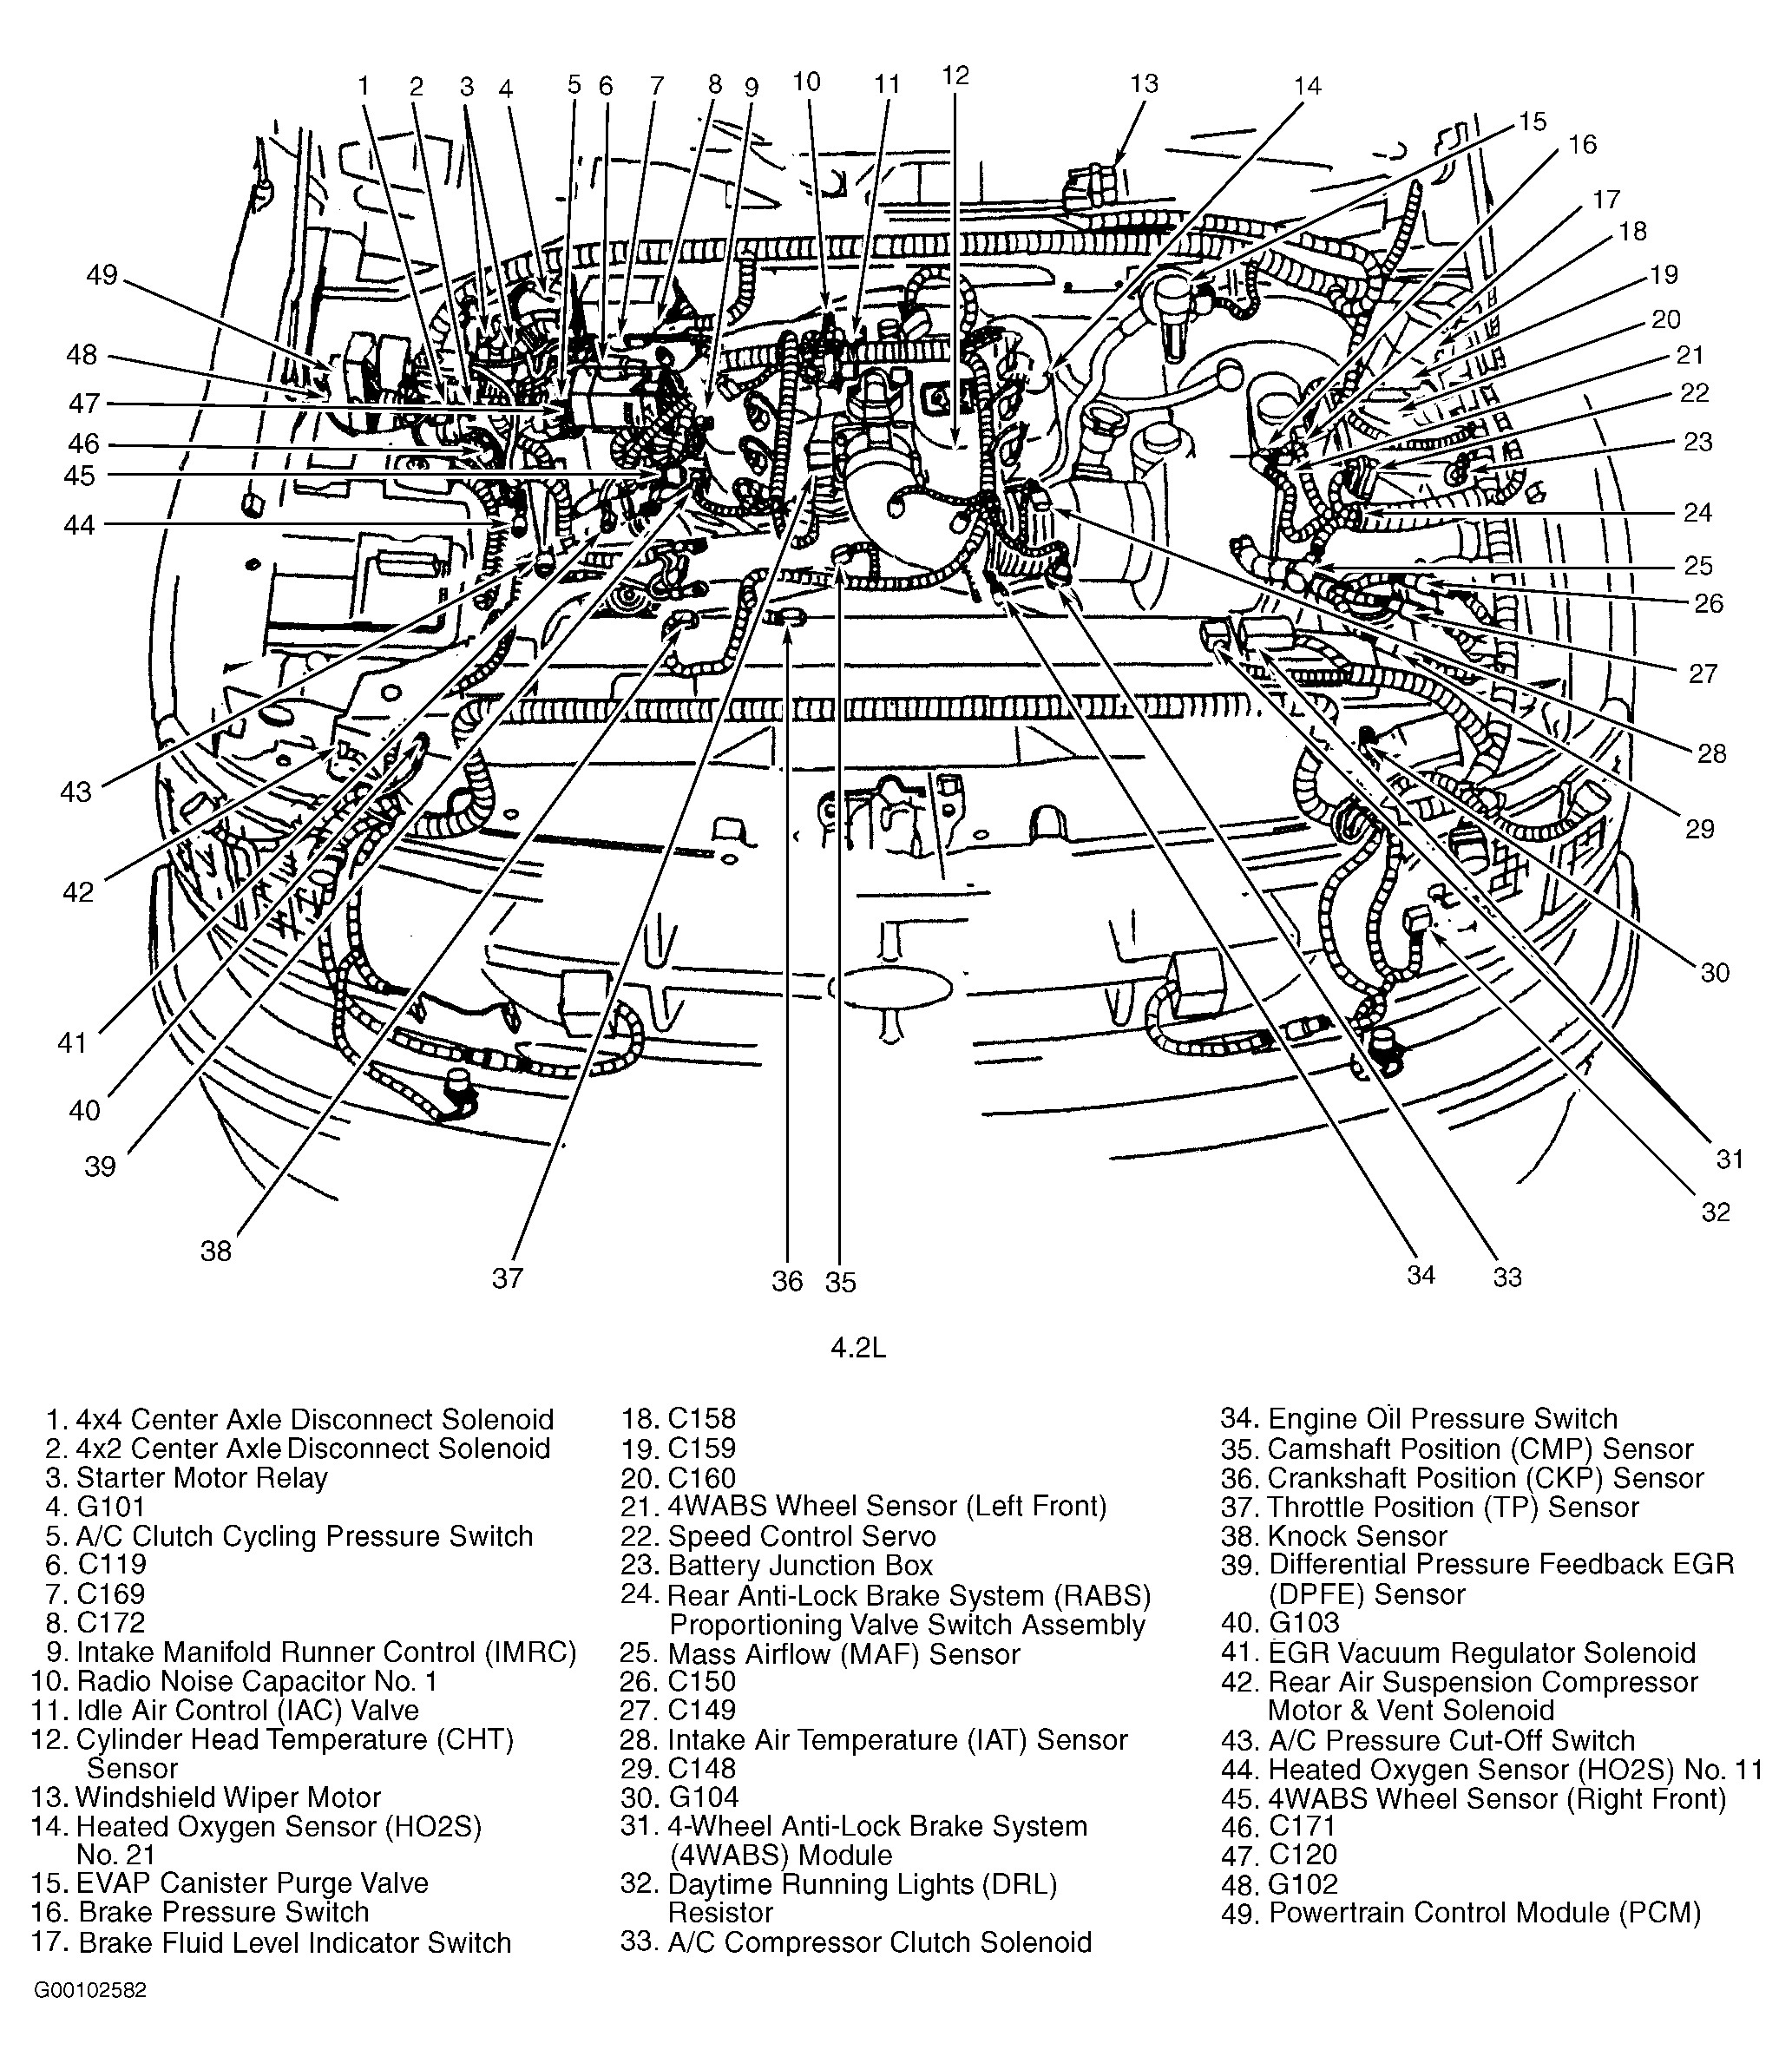 2002 ford F150 V6 Engine Diagram Wiring ford F 150 4 2 V6 Engine Diagram Full Quality Of 2002 ford F150 V6 Engine Diagram